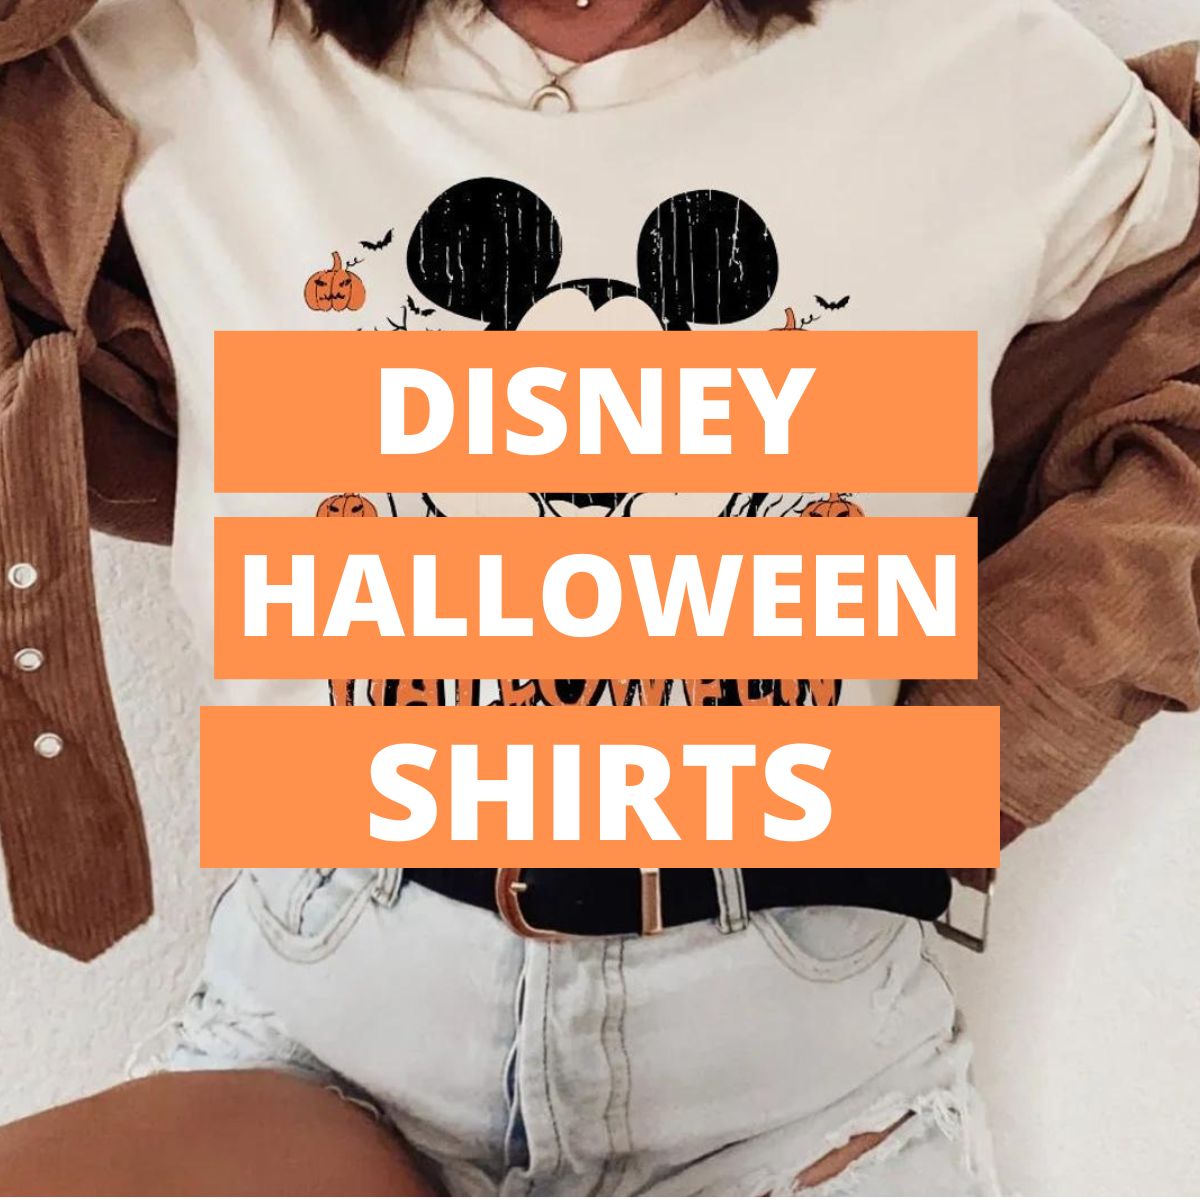 disney halloween shirts featured image